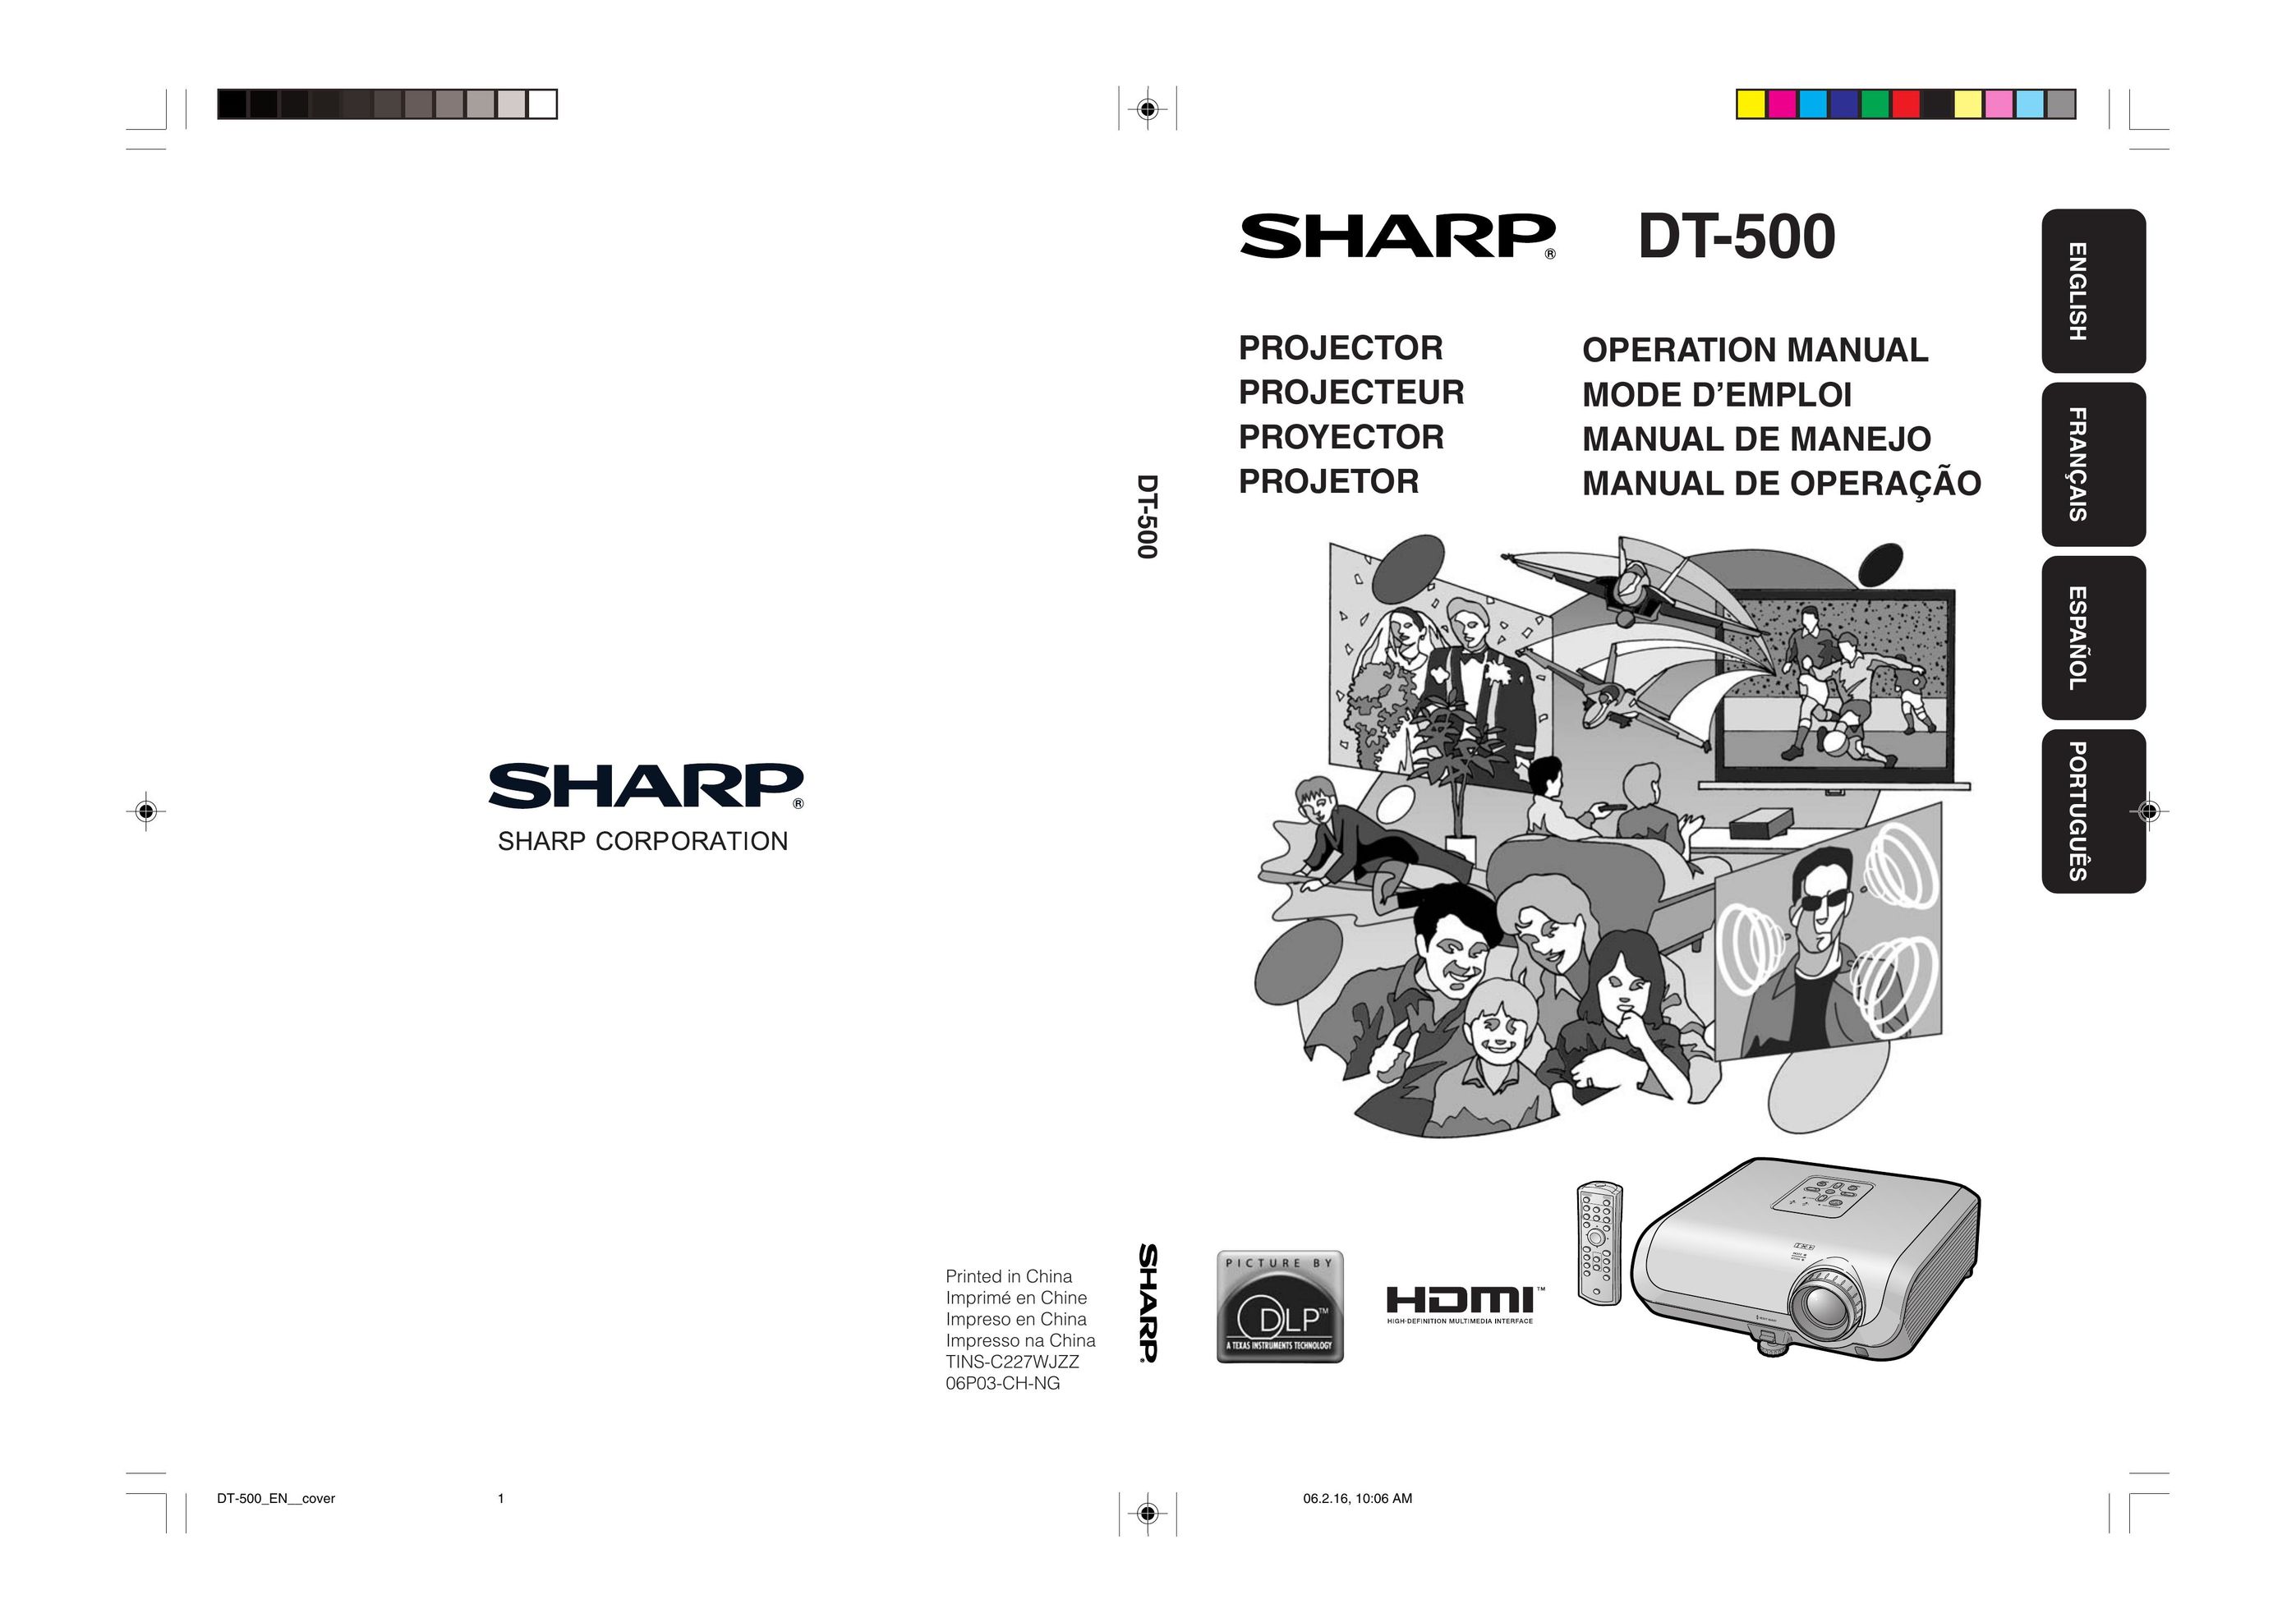 Sharp DT-500 Projector User Manual